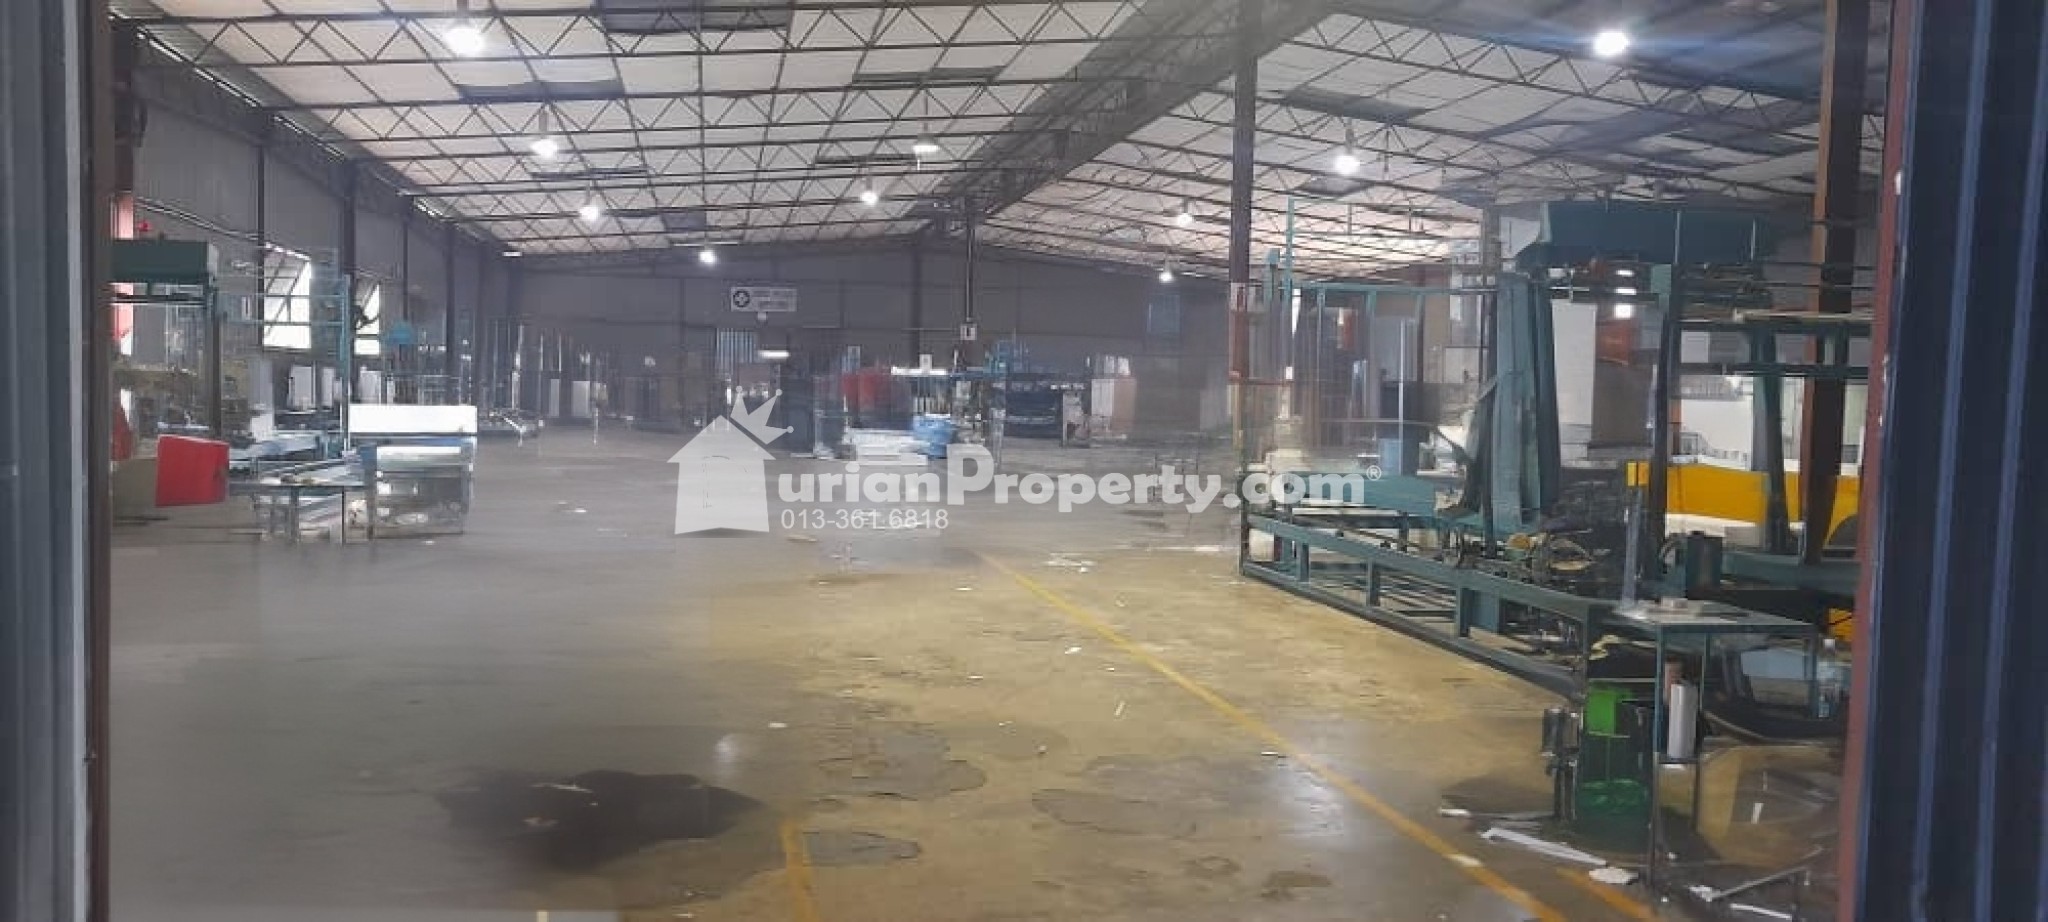 Detached Factory For Sale at Kapar Industrial Park